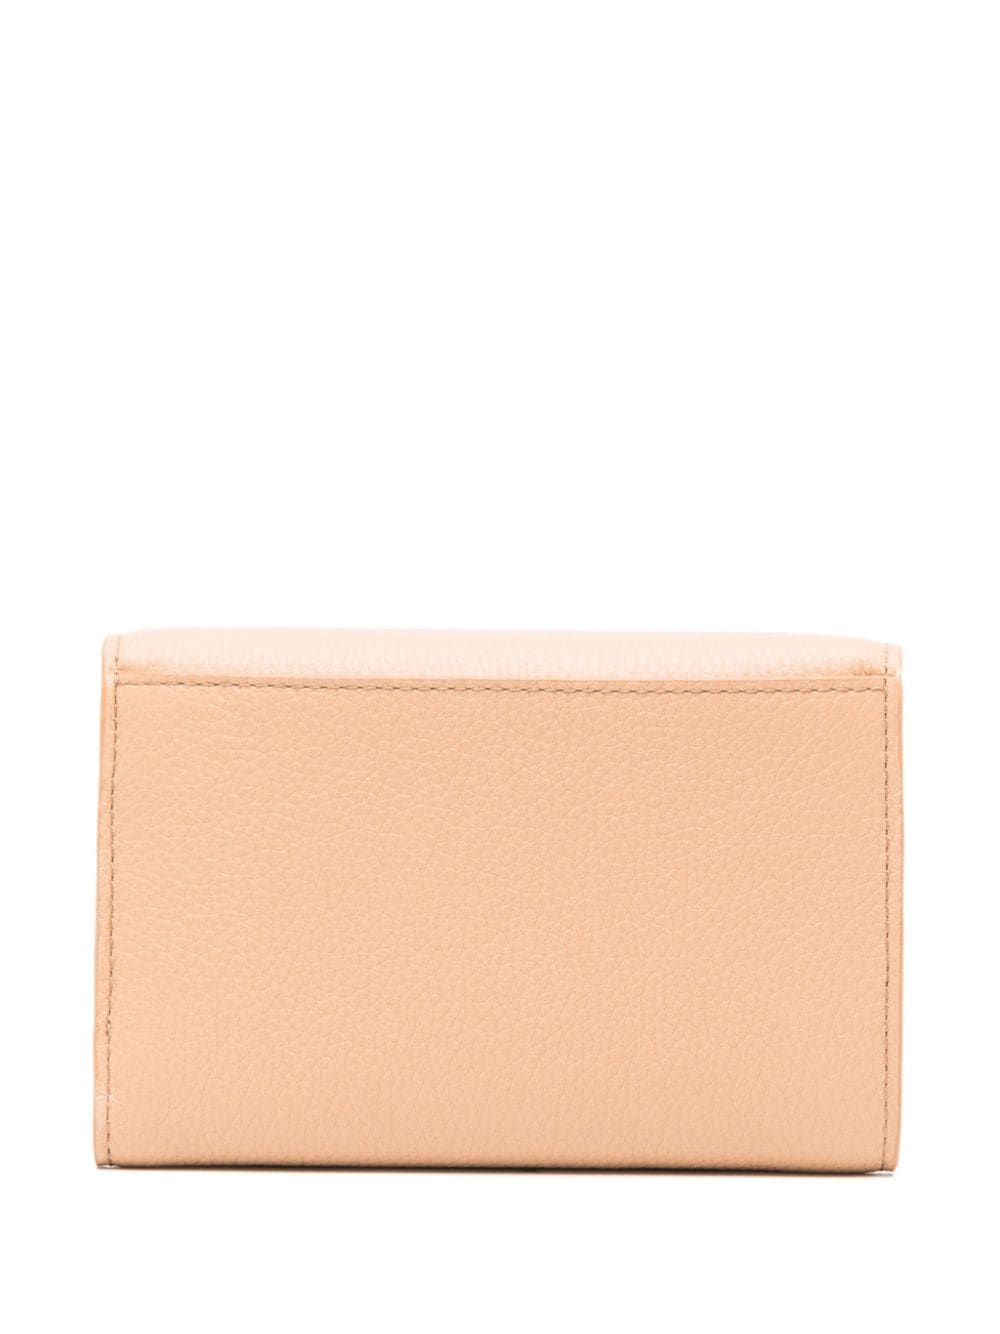 Chloé tri-fold leather wallet - Beige